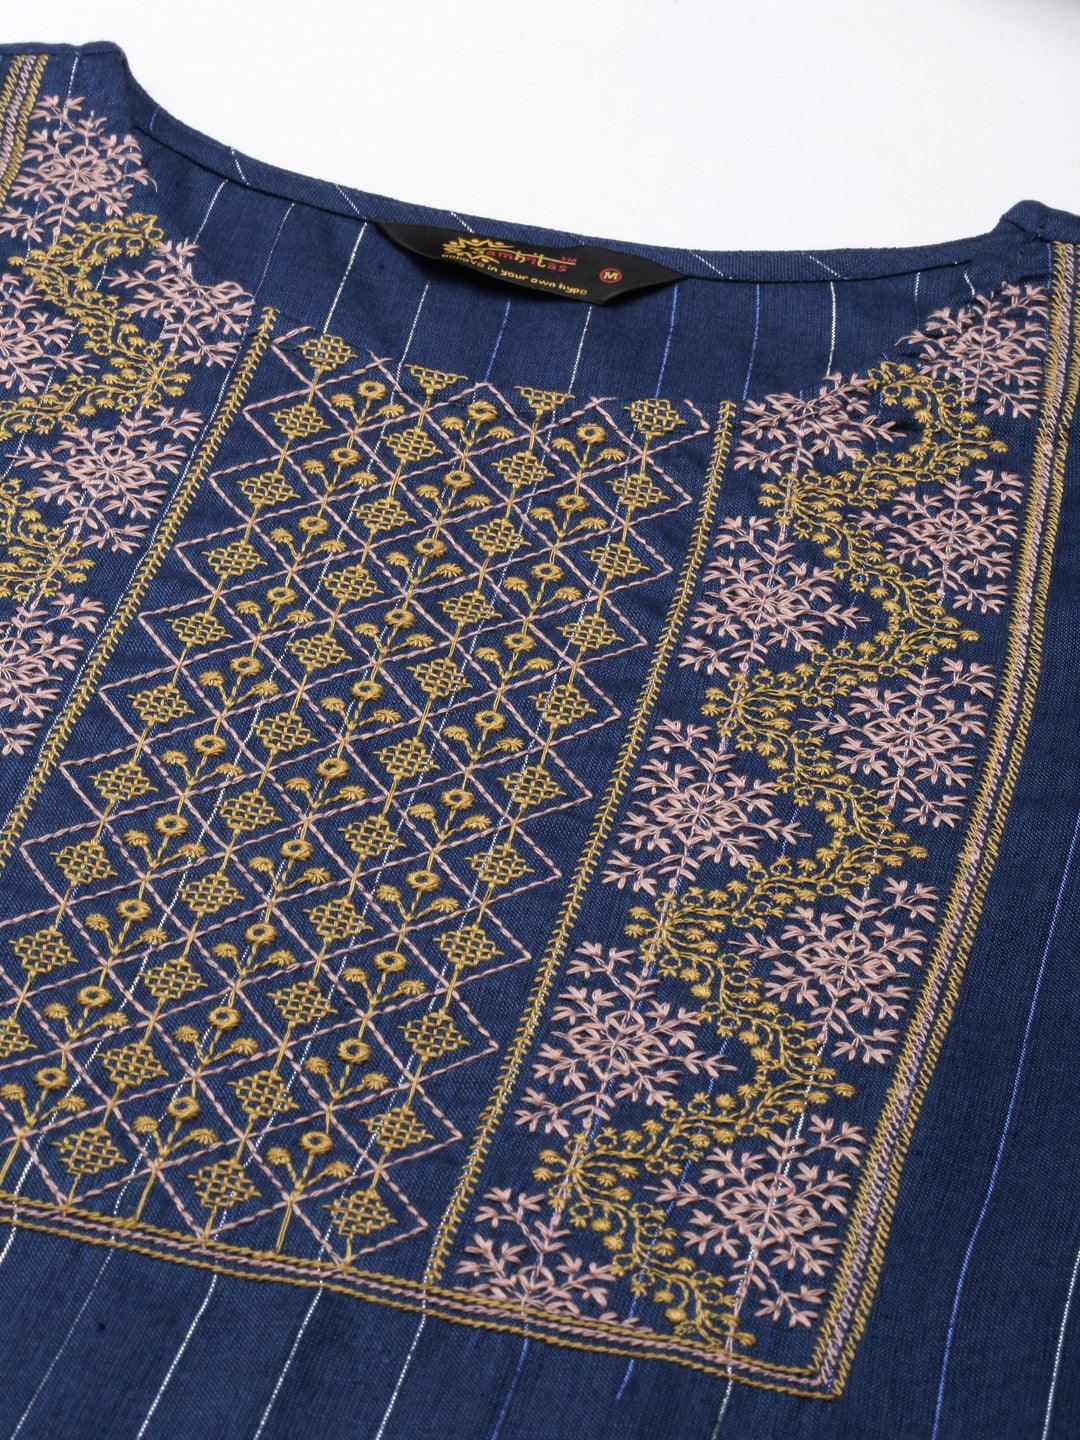 Women's blue kurta featuring gold embroidery on indigo fabric